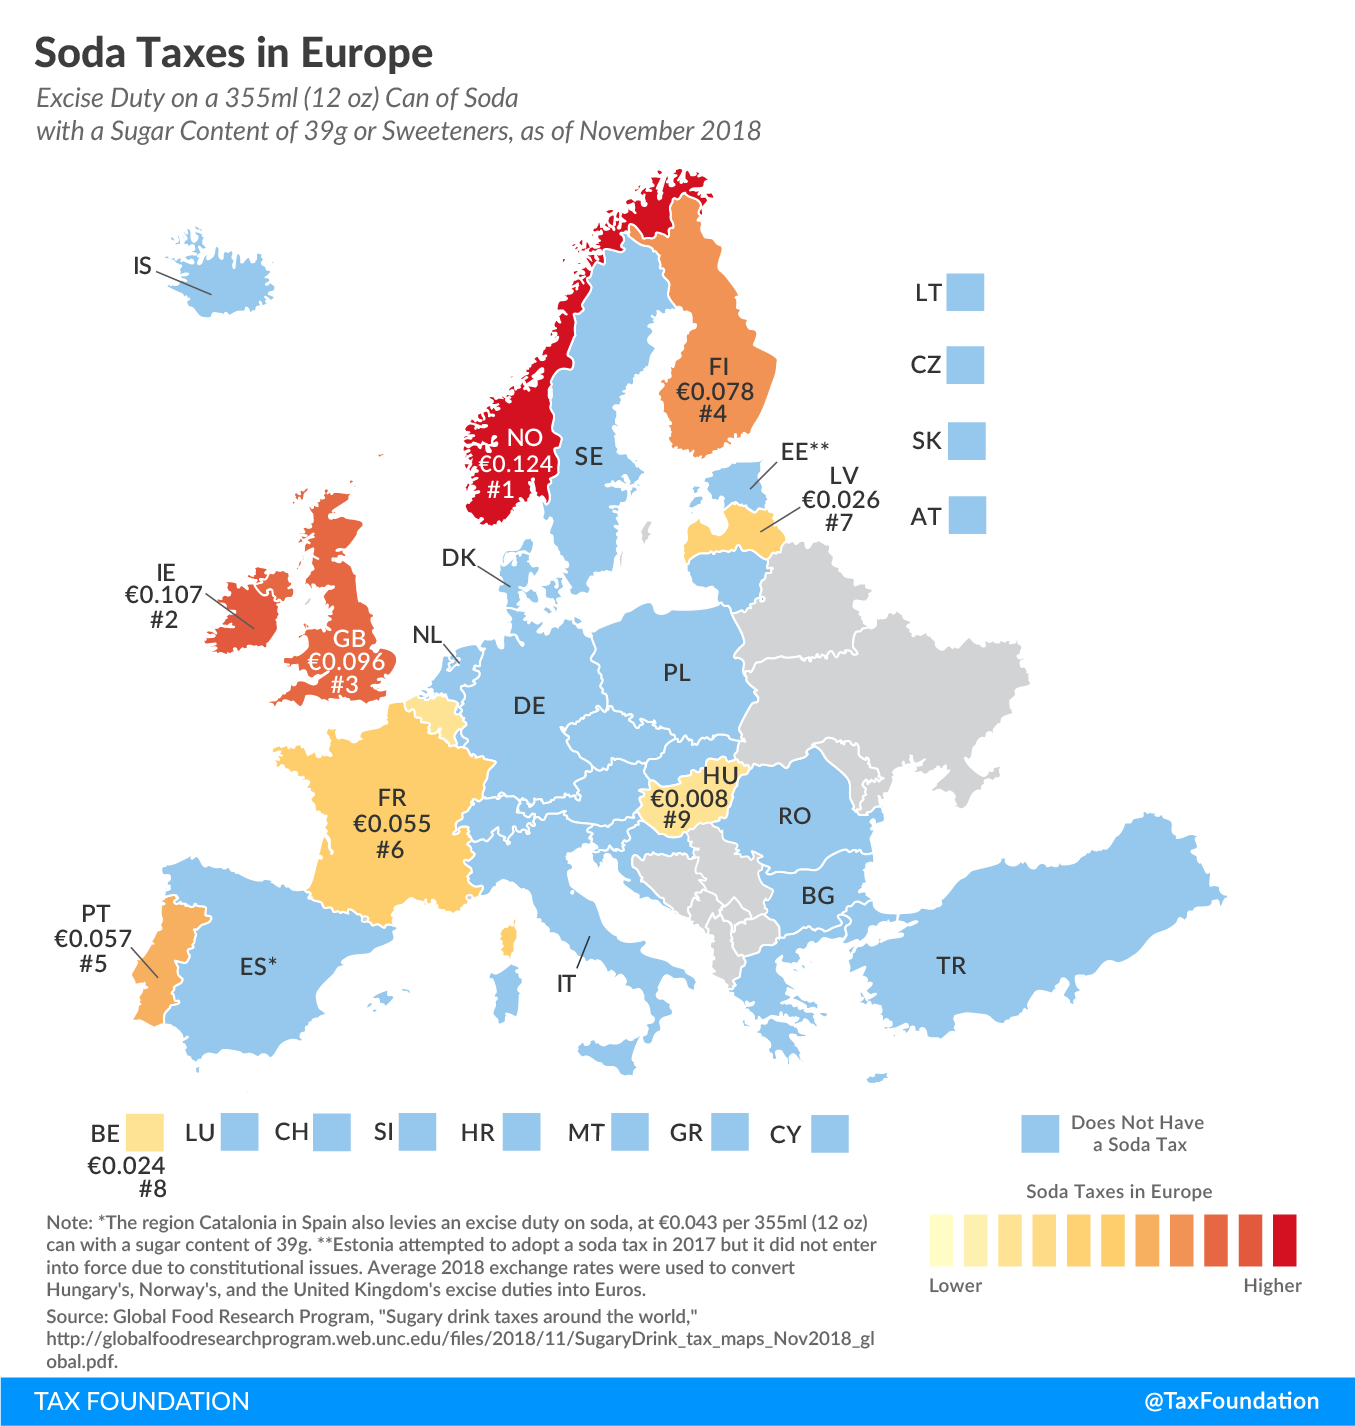 soda tax in Europe, soda taxes in Europe, sugary drink tax, sugar tax, soft drink tax